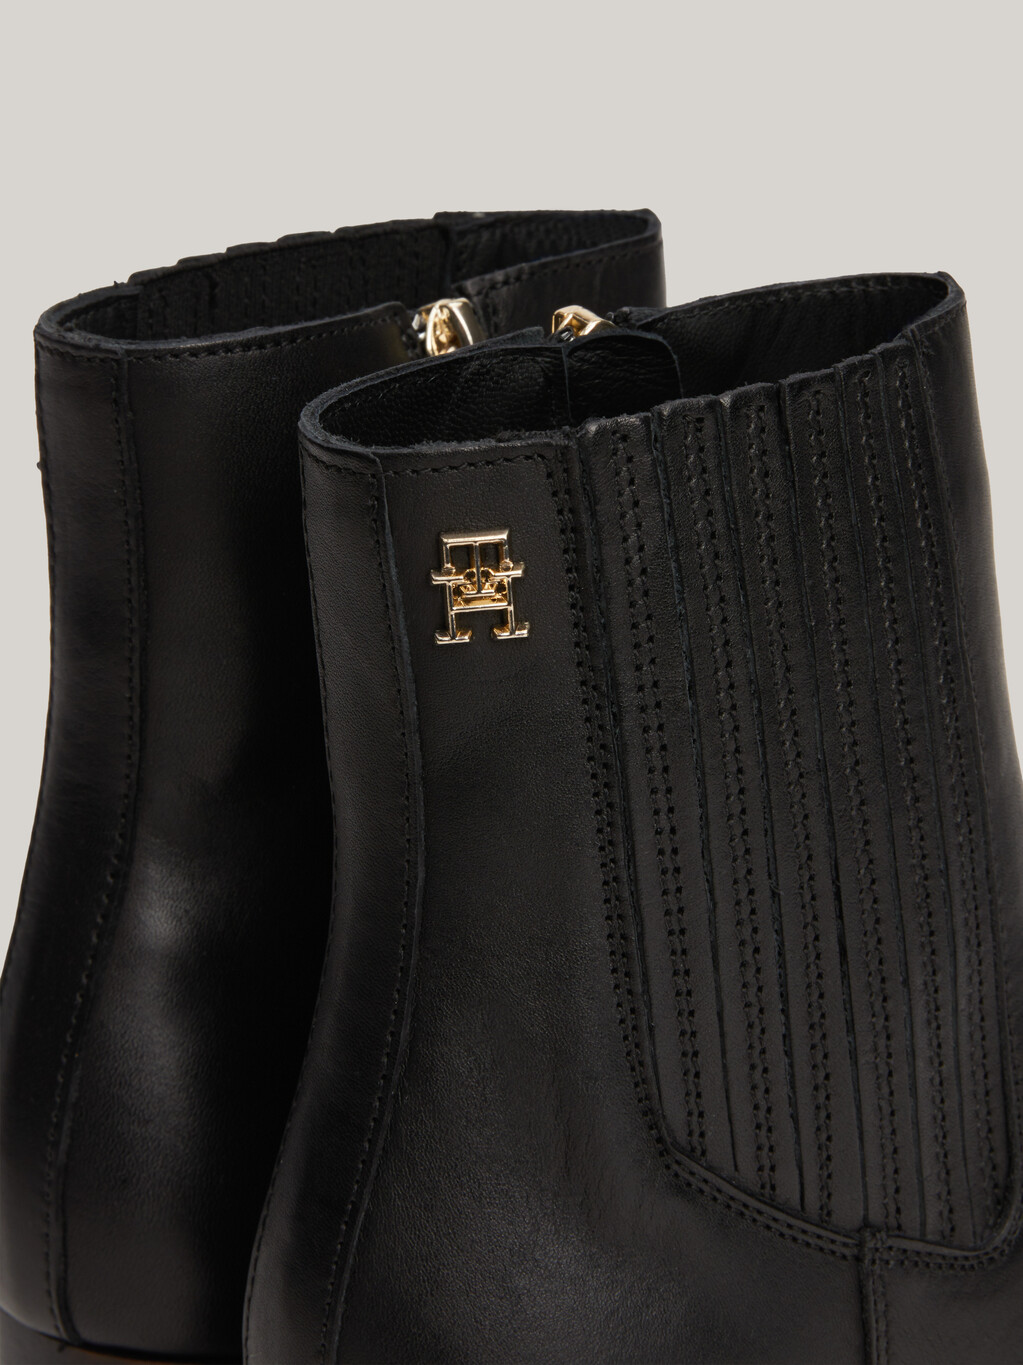 Essential Leather Block Heel Ankle Boots, Black, hi-res